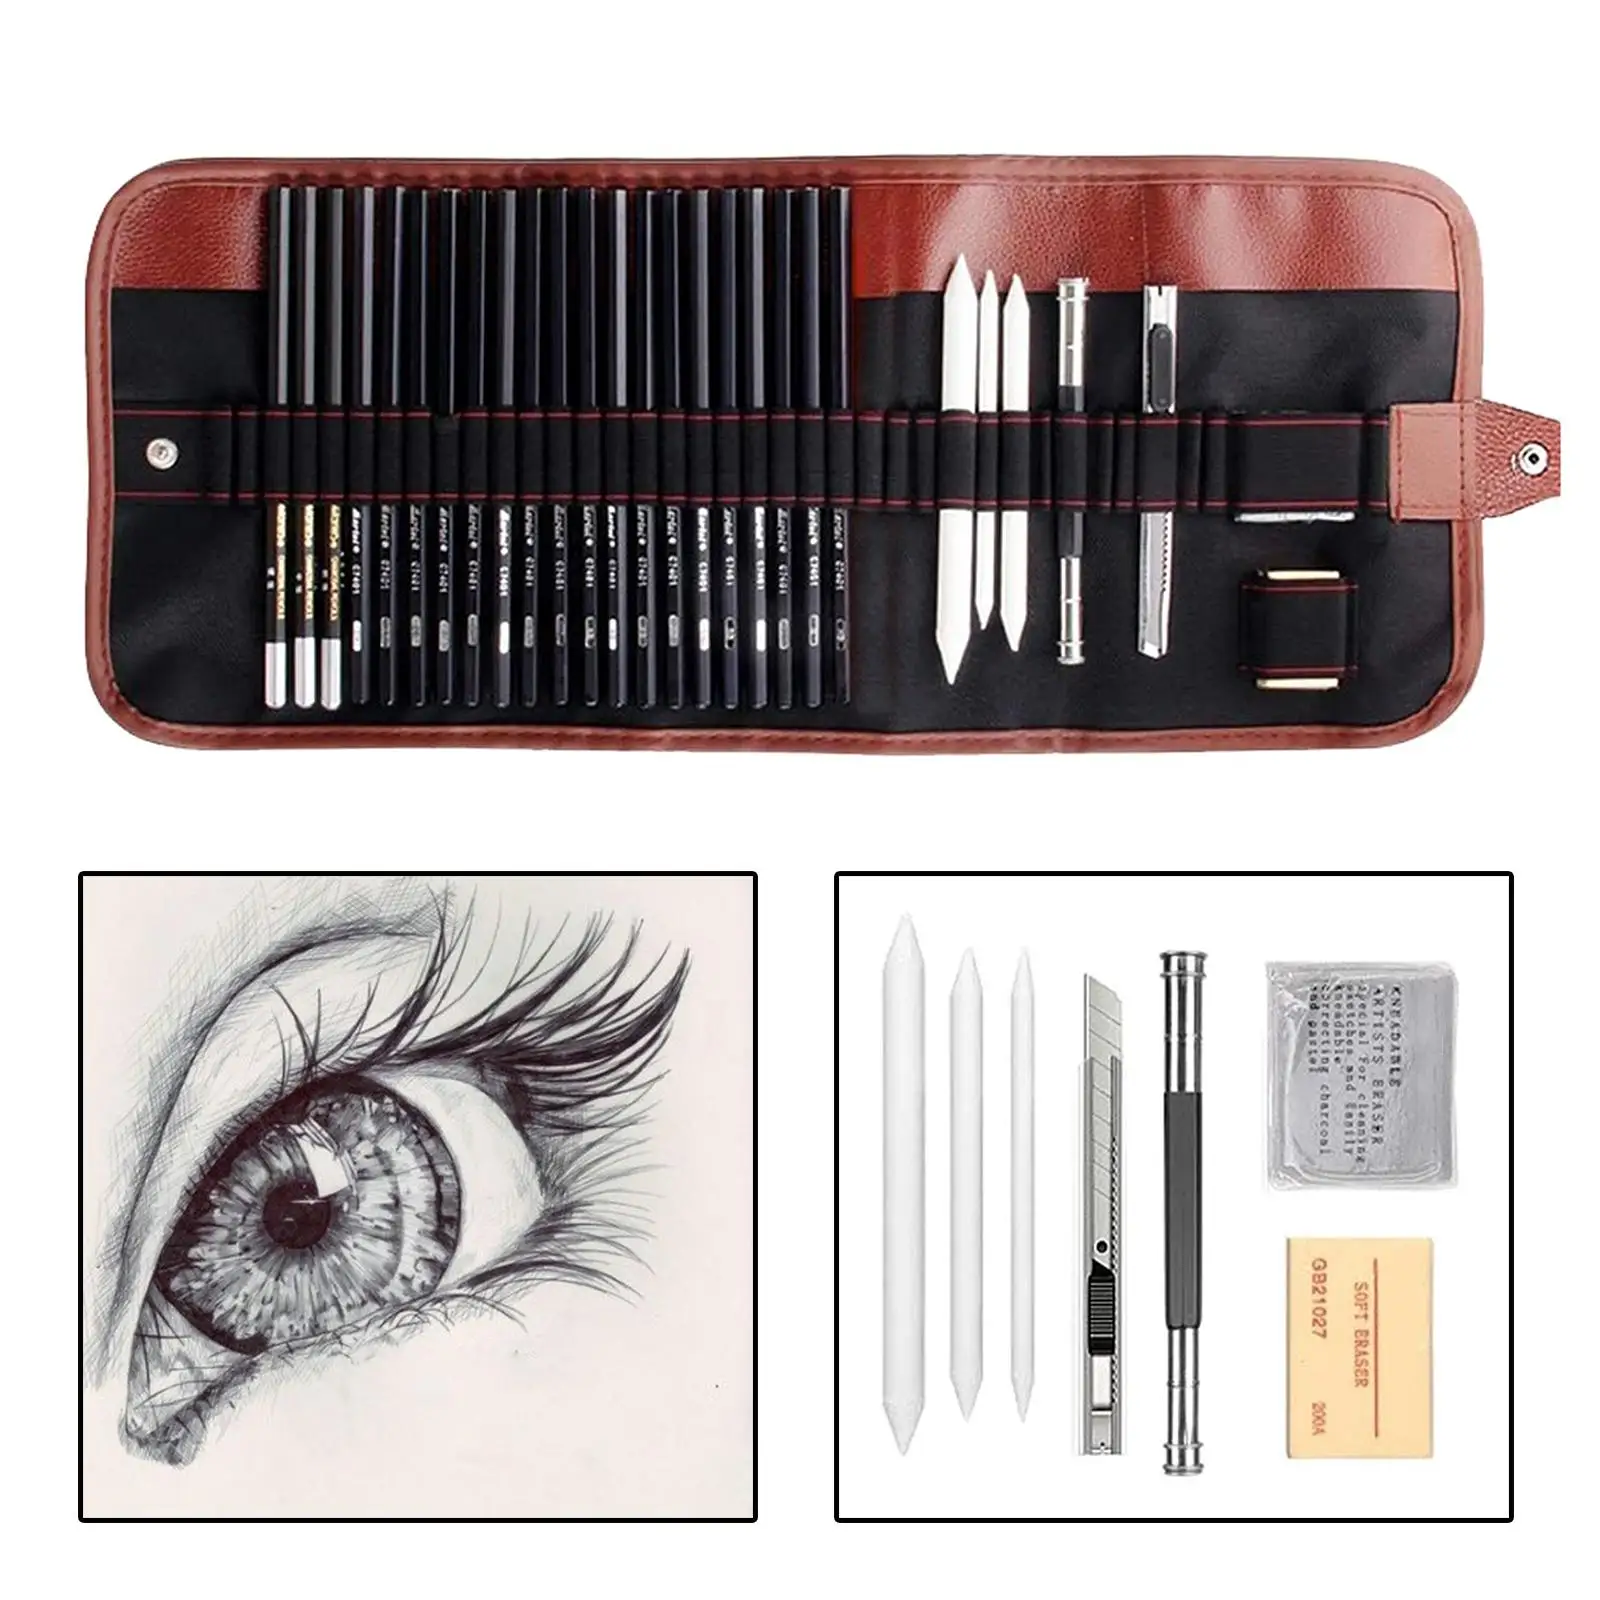 Sketching Pencil Set, Drawing Pencils and Sketch,   Includes Pencils, Sketch Pencils Set for Drawing